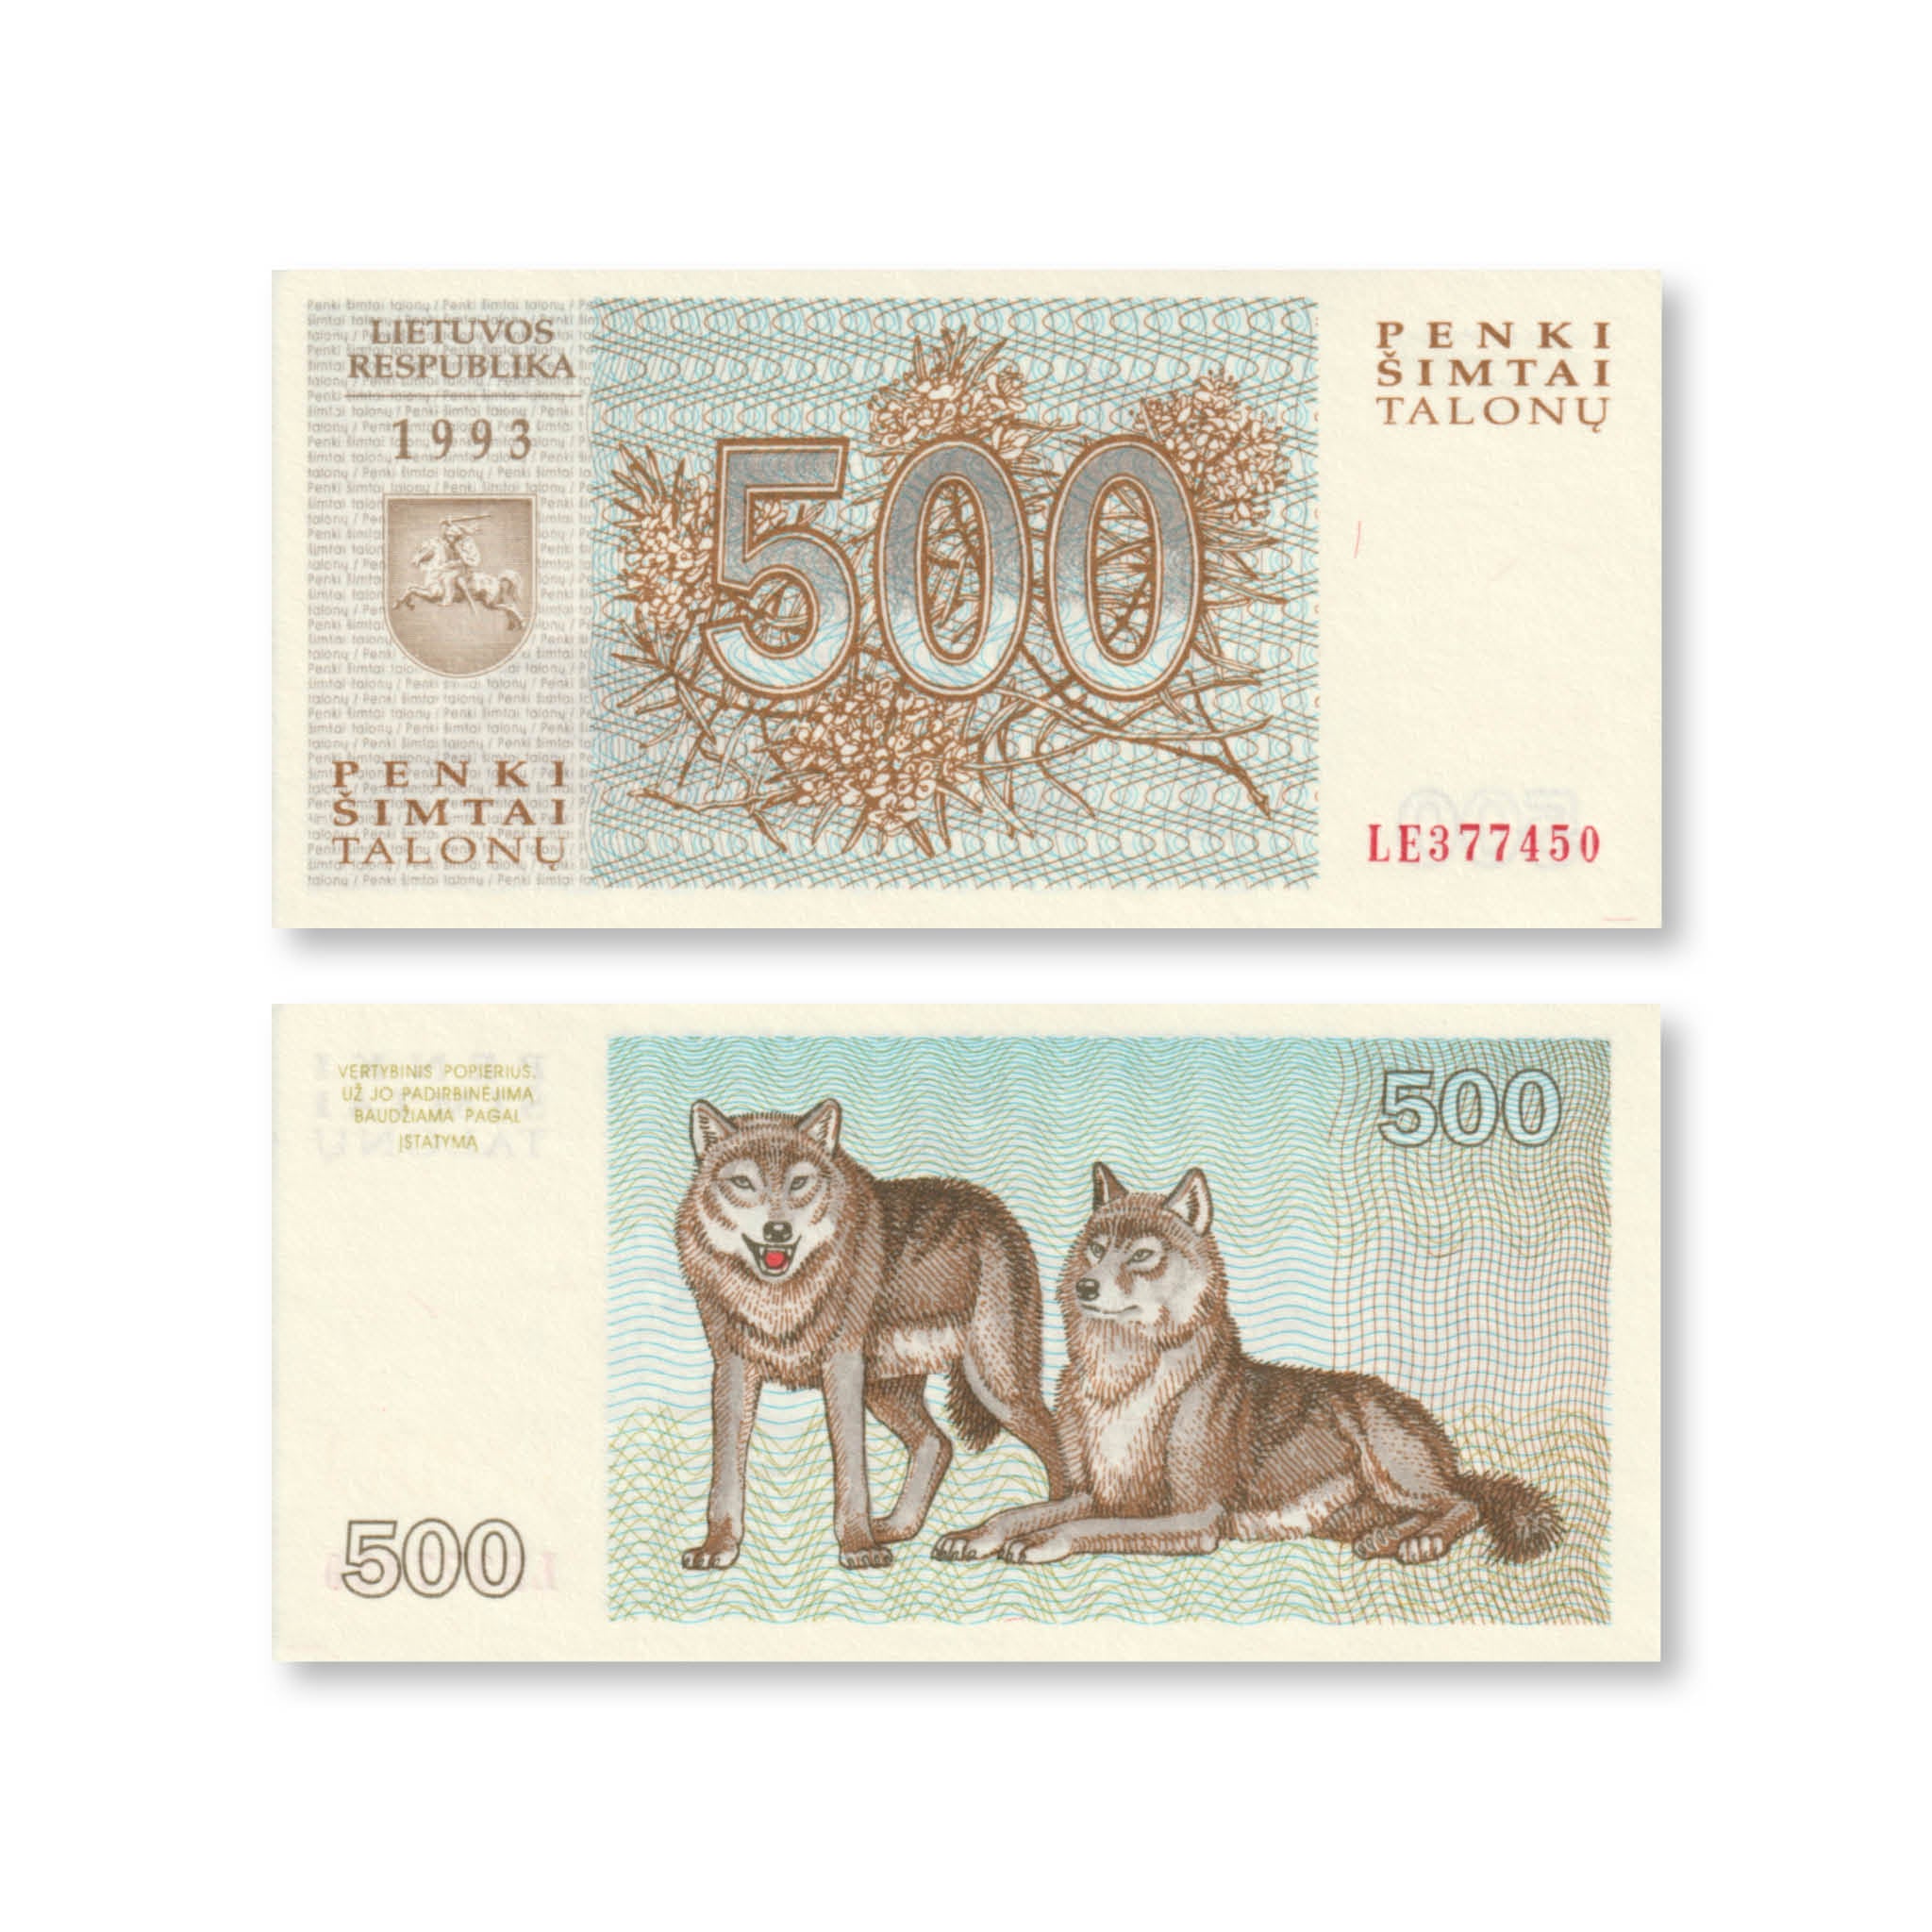 Lithuania 500 Talonas, 1993, B157a, P46, UNC - Robert's World Money - World Banknotes